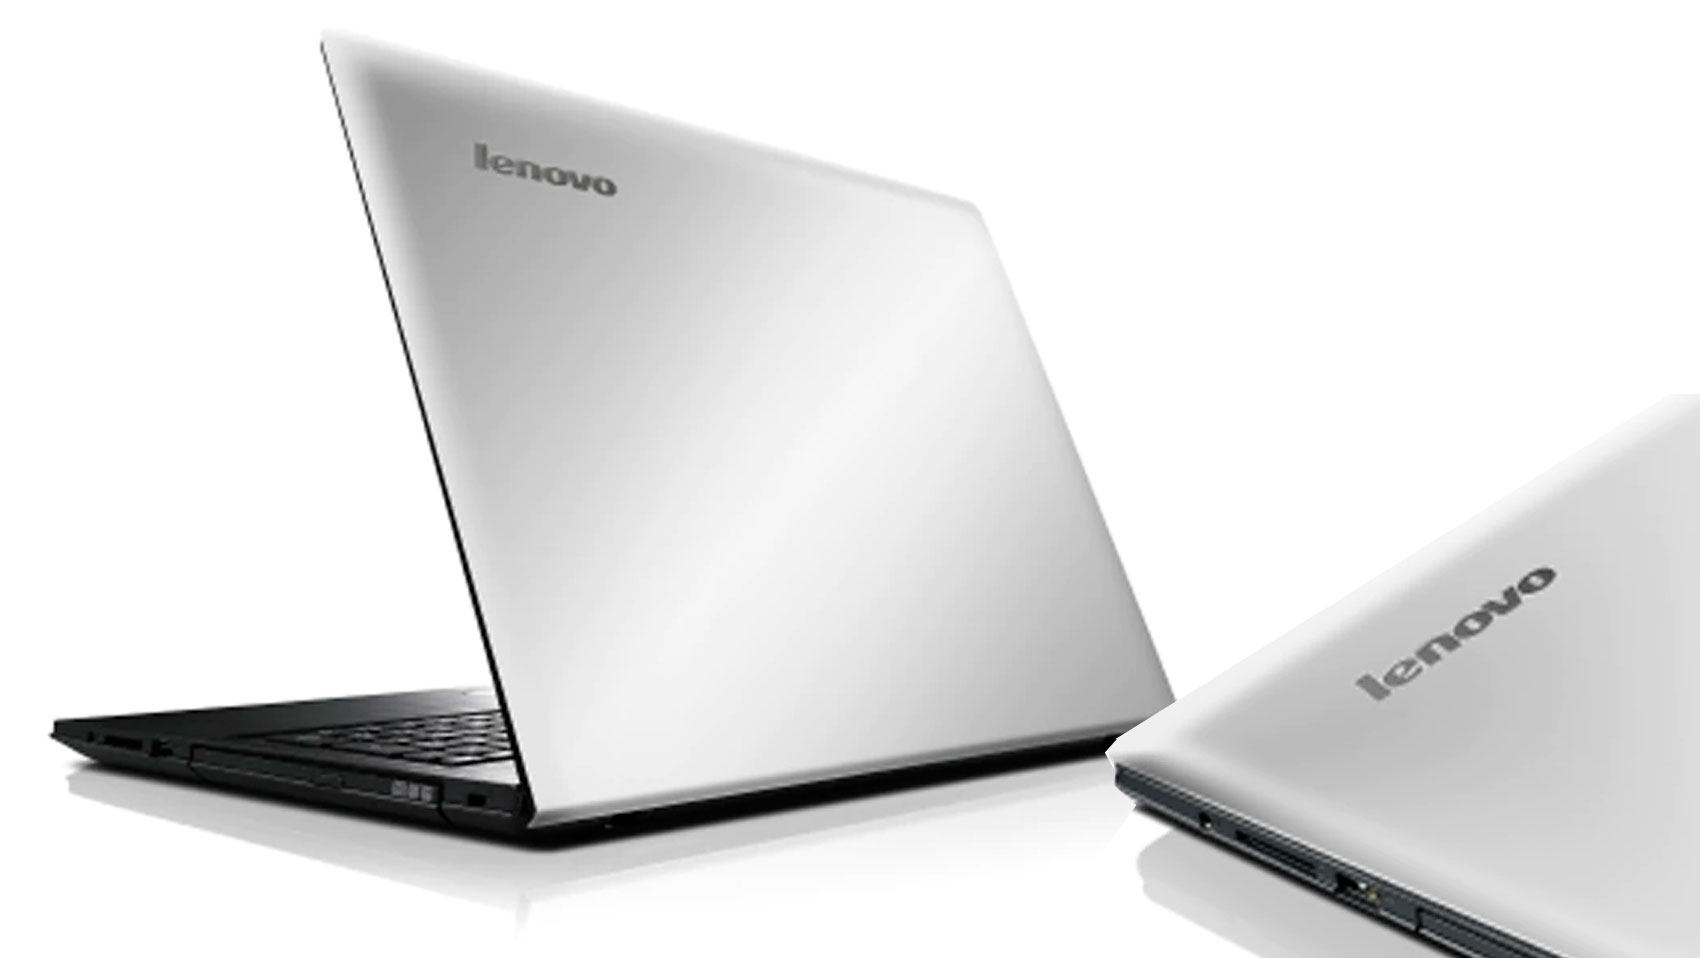 Notebook Lenovo Ideapad - Core i7 - 8Gb Ram - 120Gb SSD + 500GB - LevTech  Store